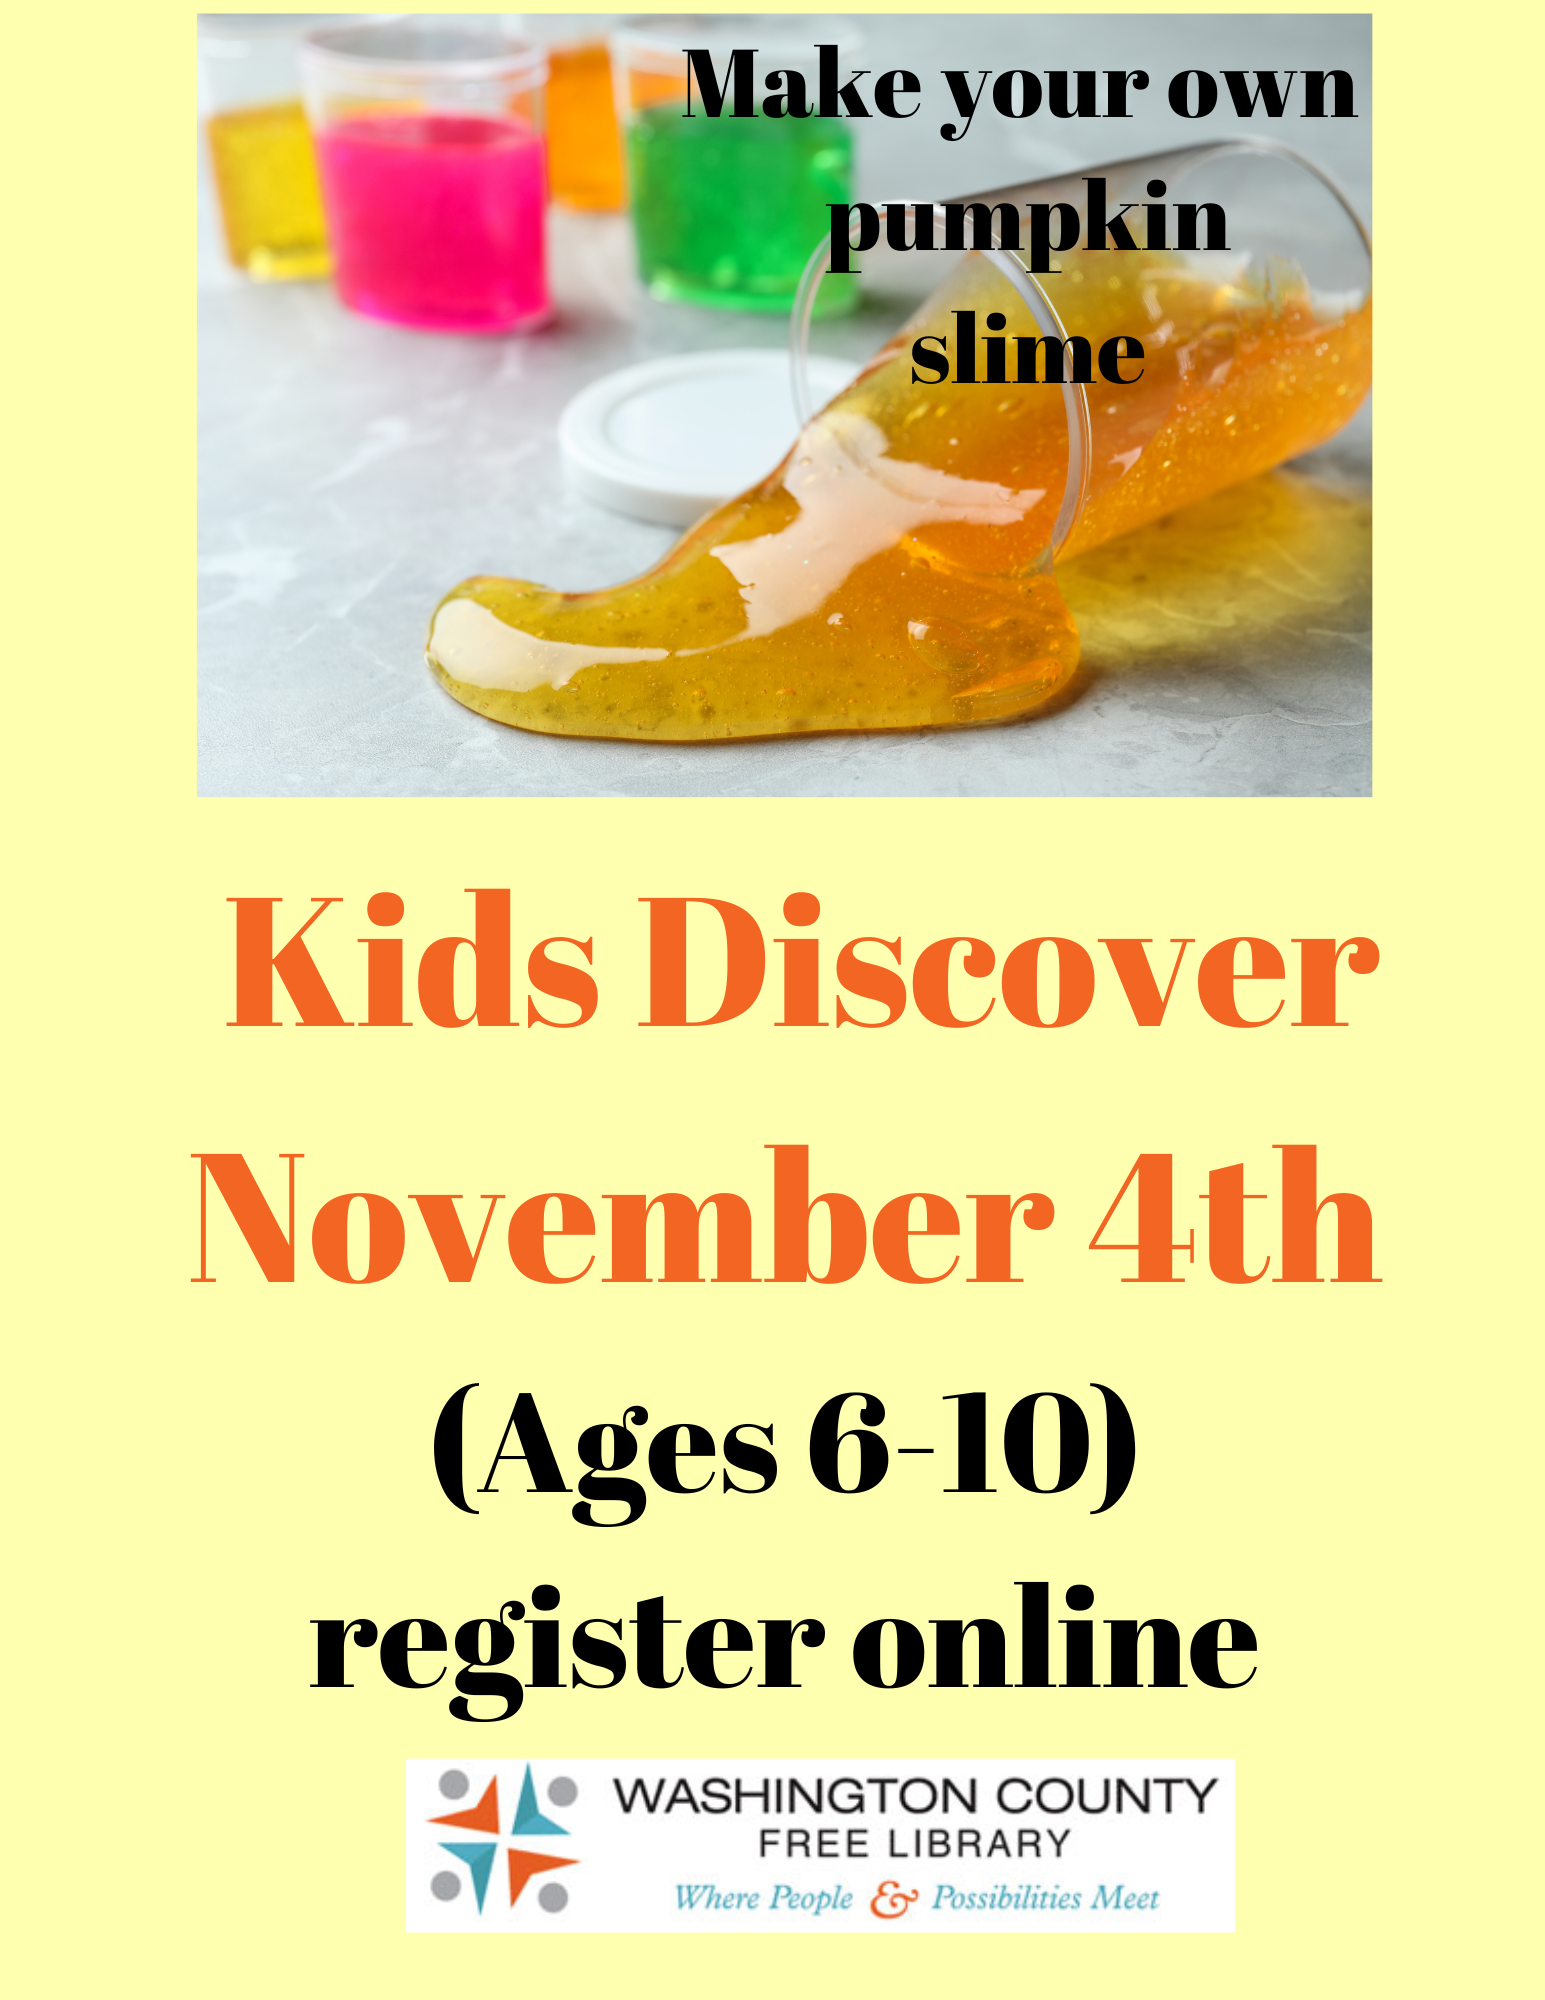 Kids Discover: Pumpkin Slime